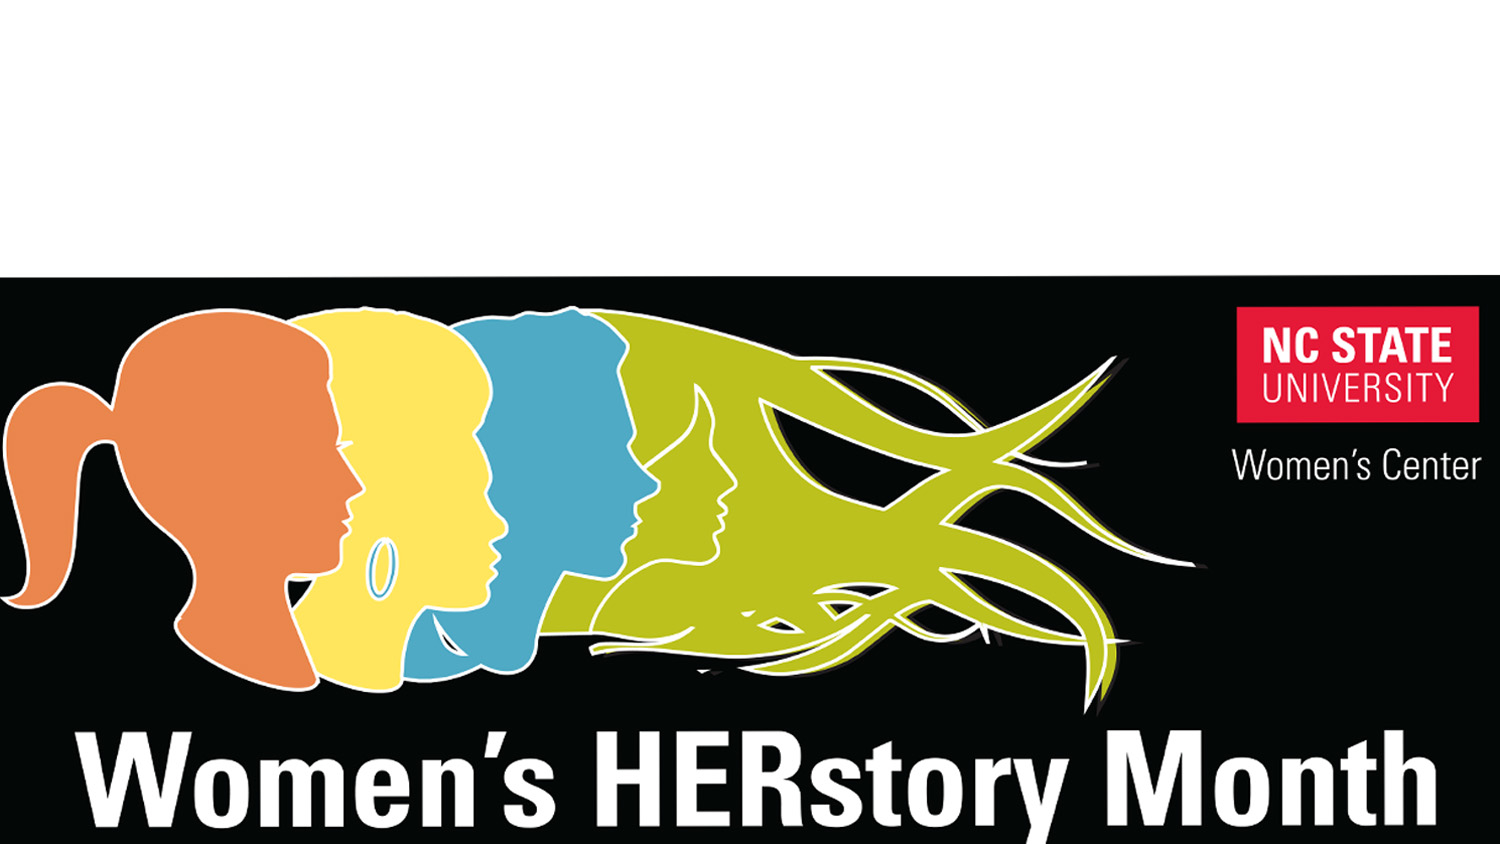 Women's Herstory Month banner